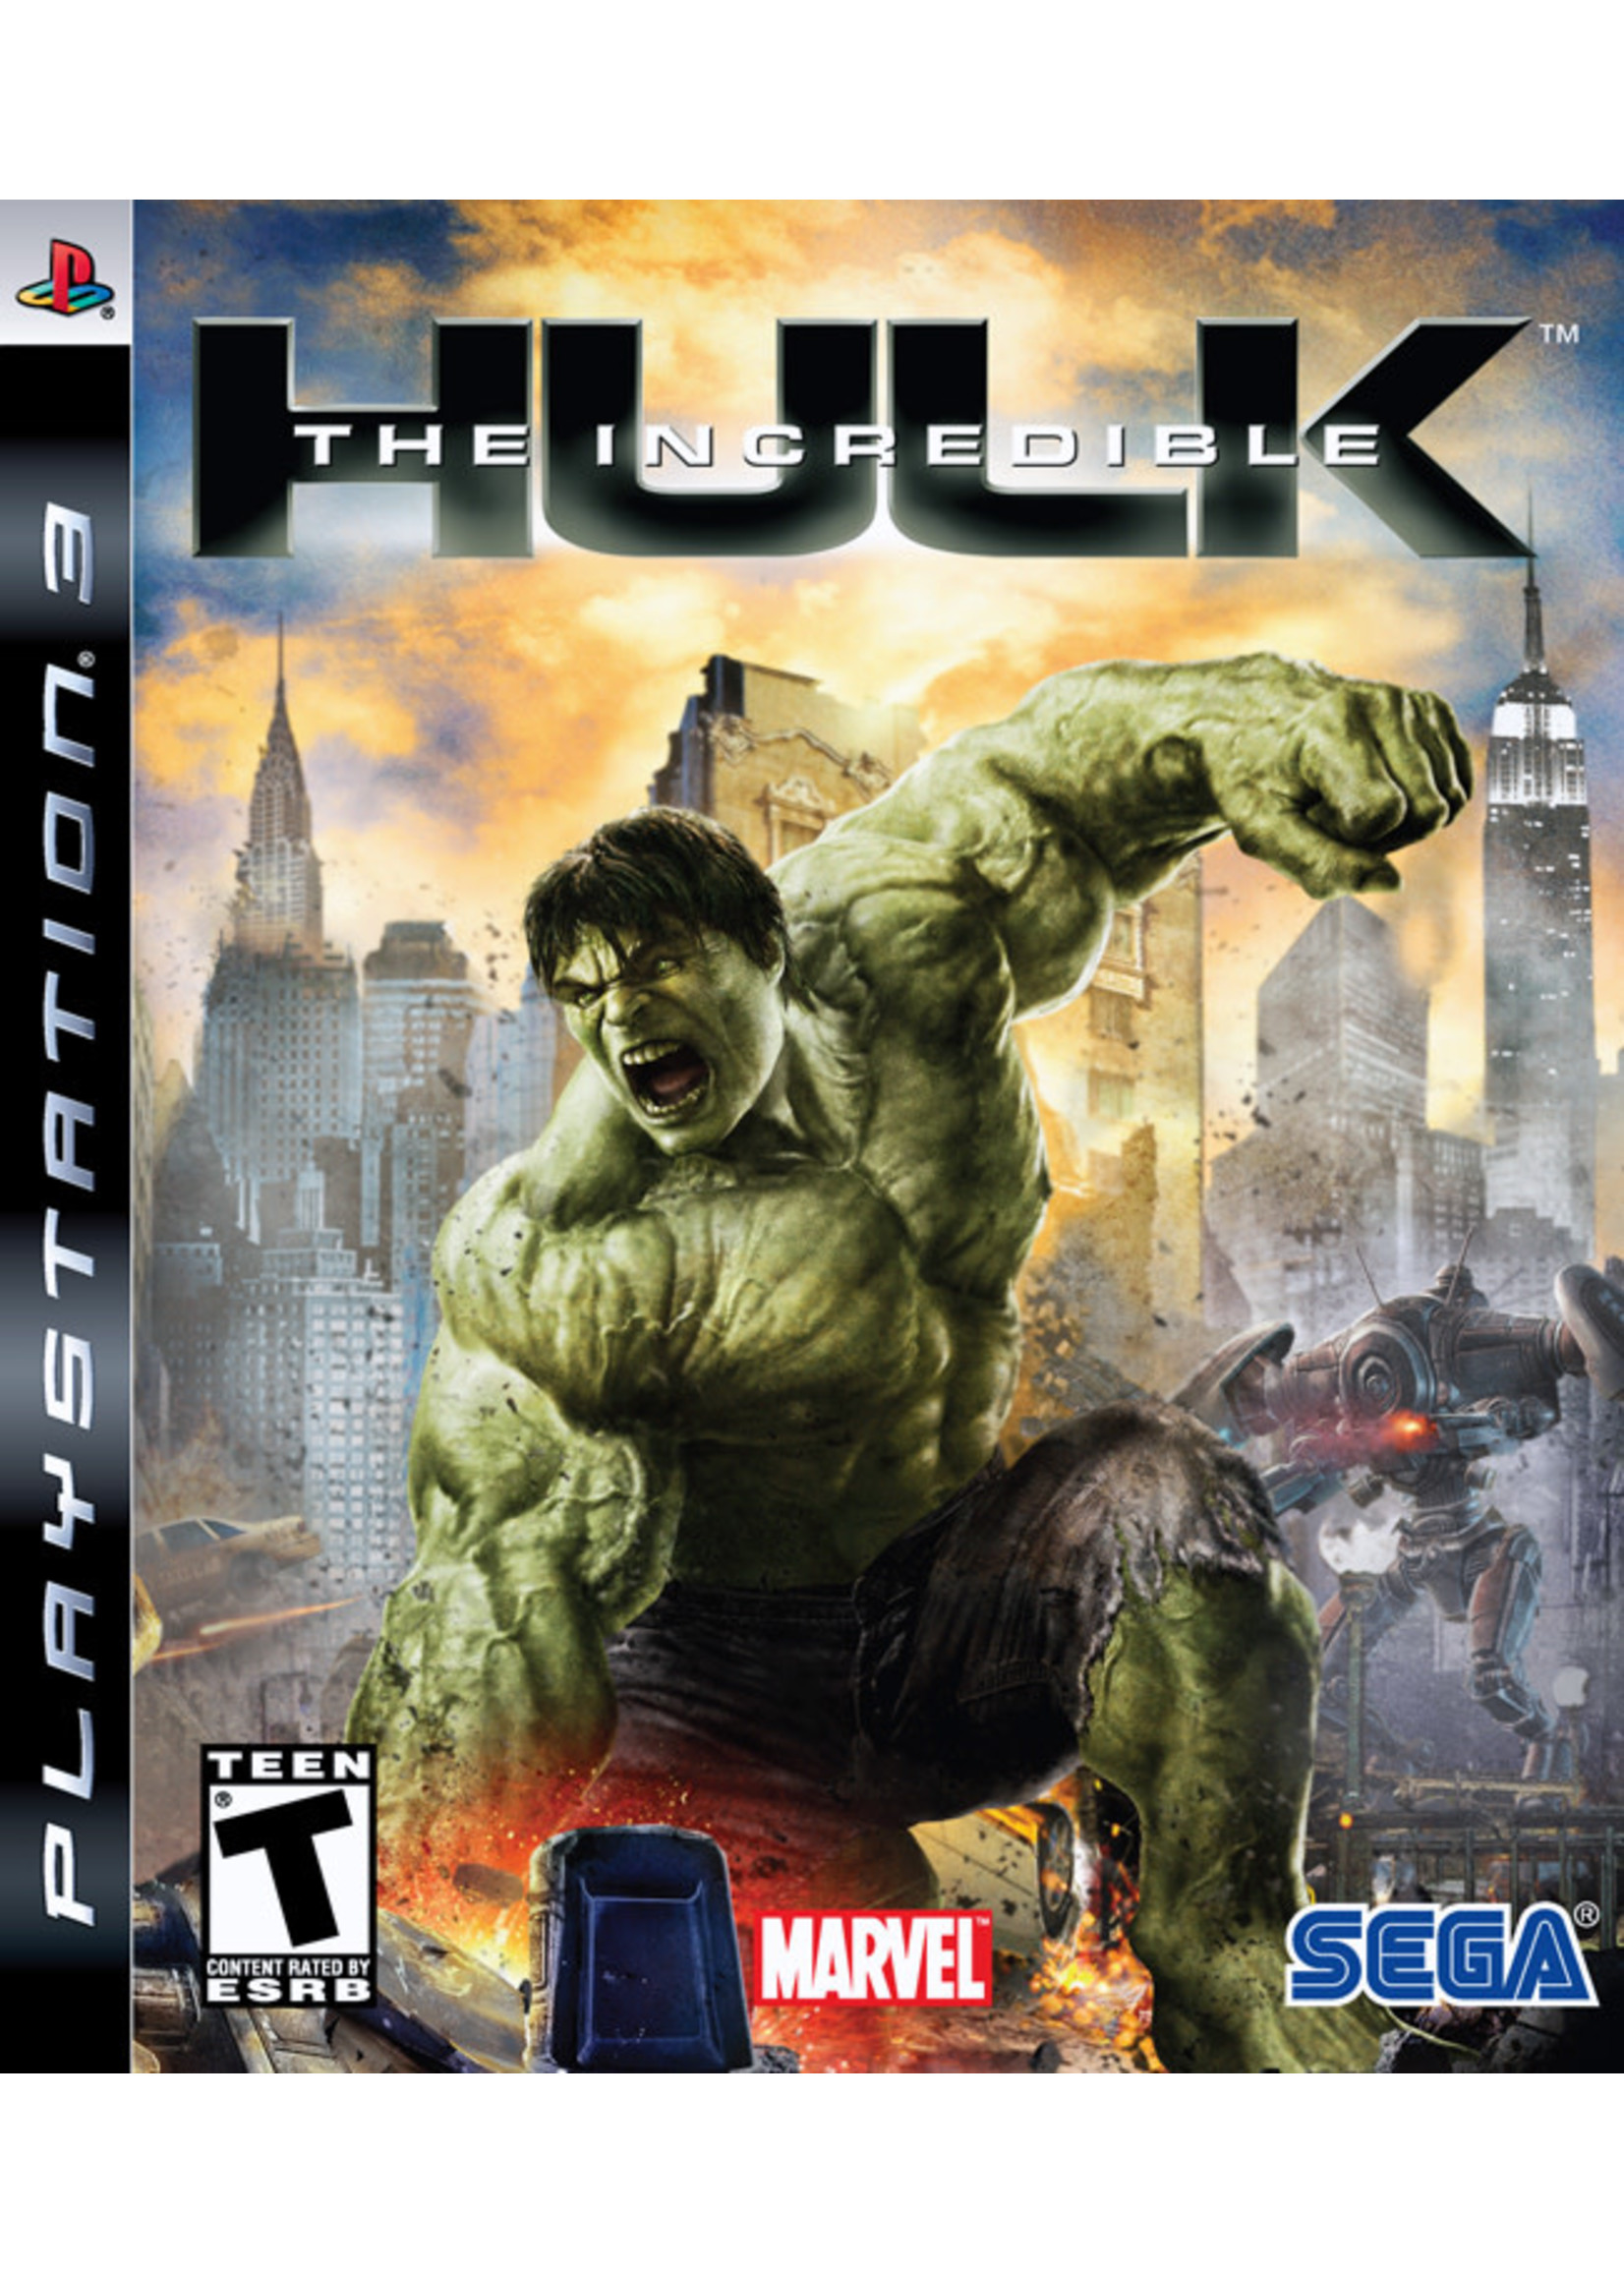 Sony Playstation 3 (PS3) Incredible Hulk, The